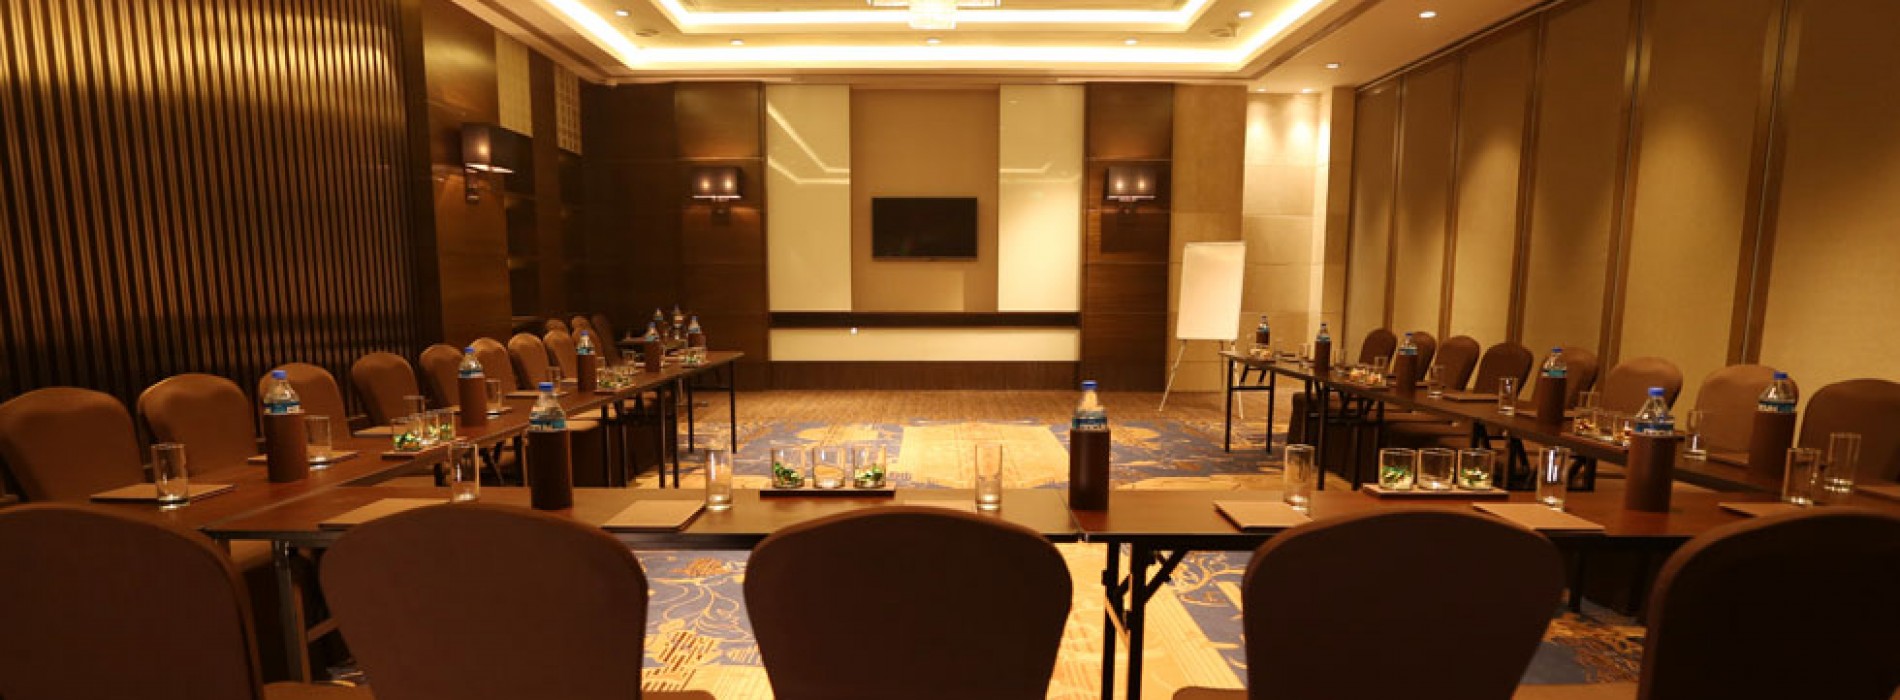 Pride Hotels launch its luxury hotel at Aerocity, New Delhi